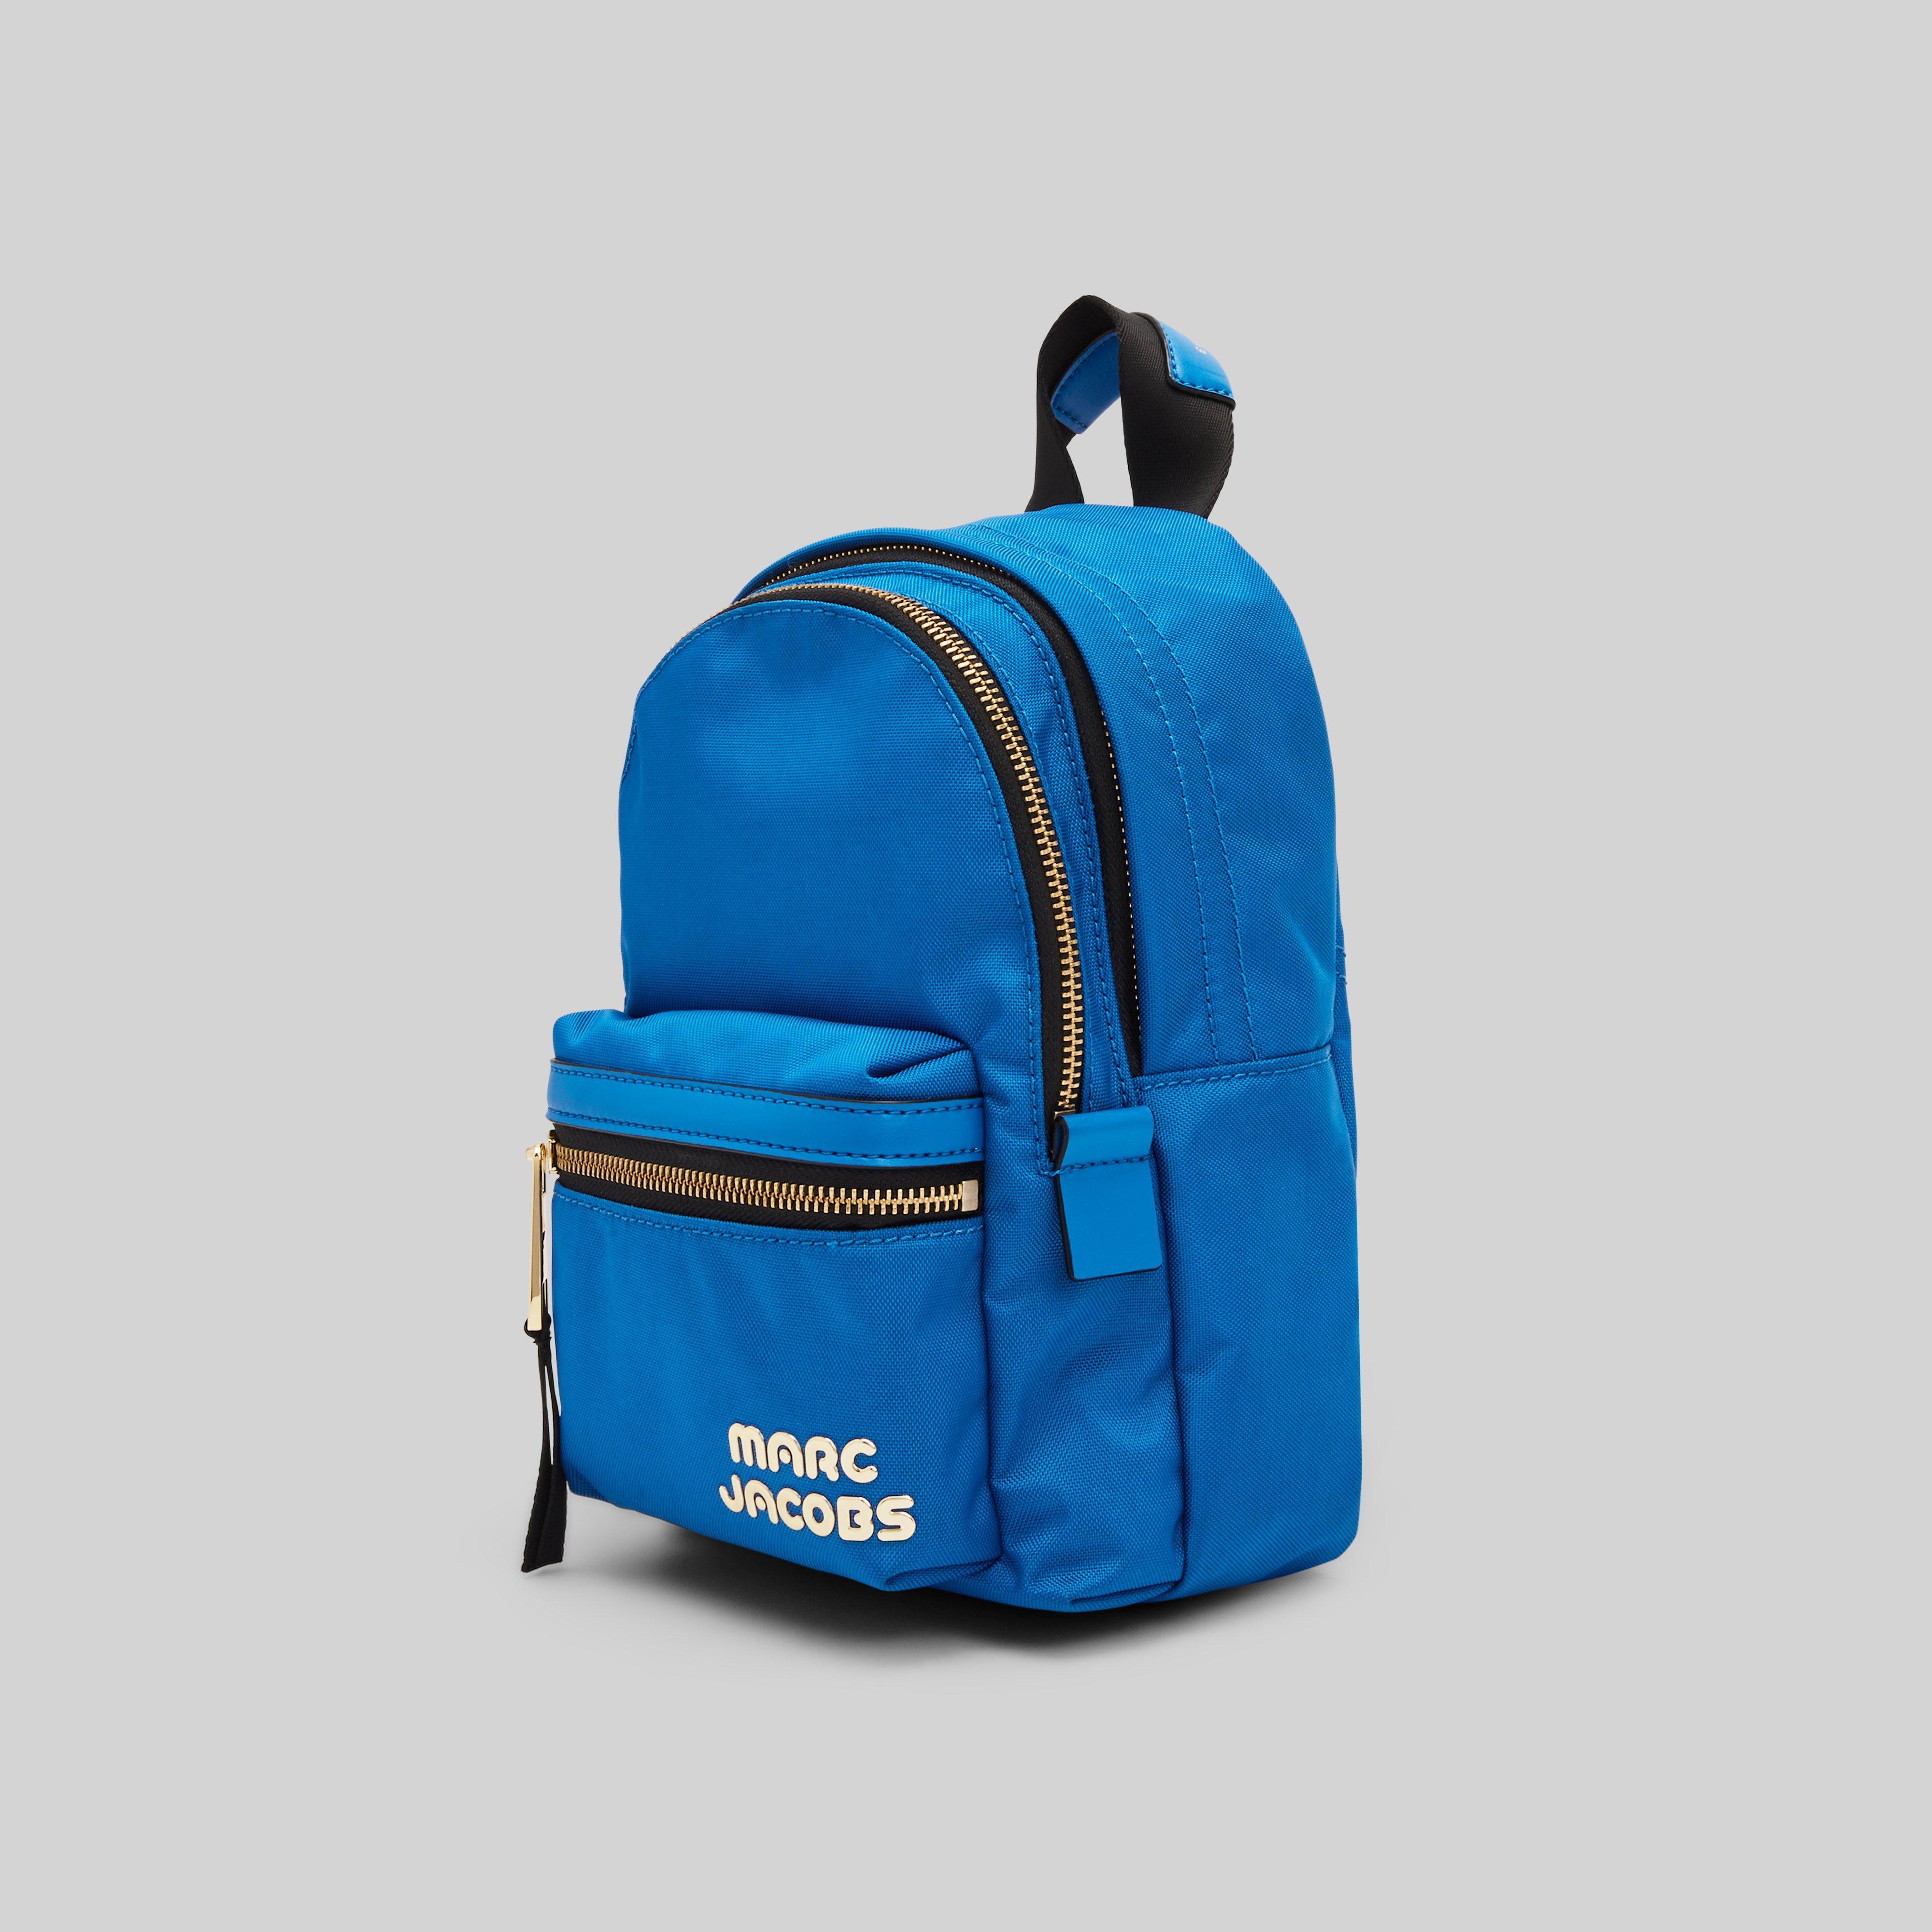 MARC JACOBS - Boys Blue Backpack (41cm)